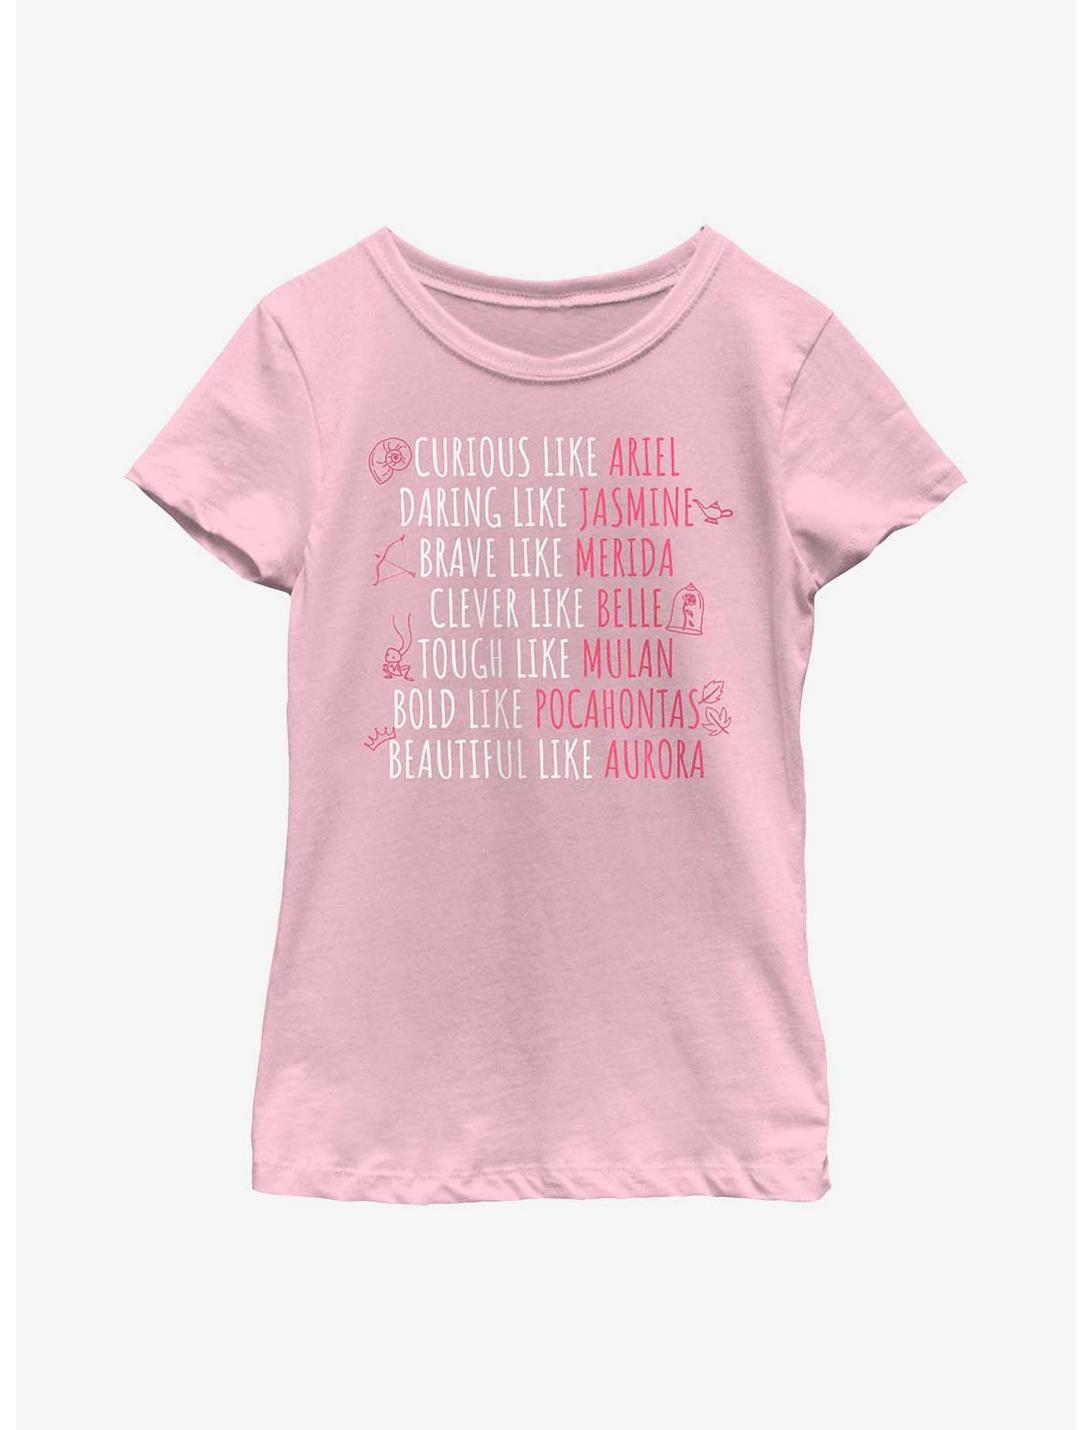 Disney Princesses Character Traits Youth Girls T-Shirt, PINK, hi-res